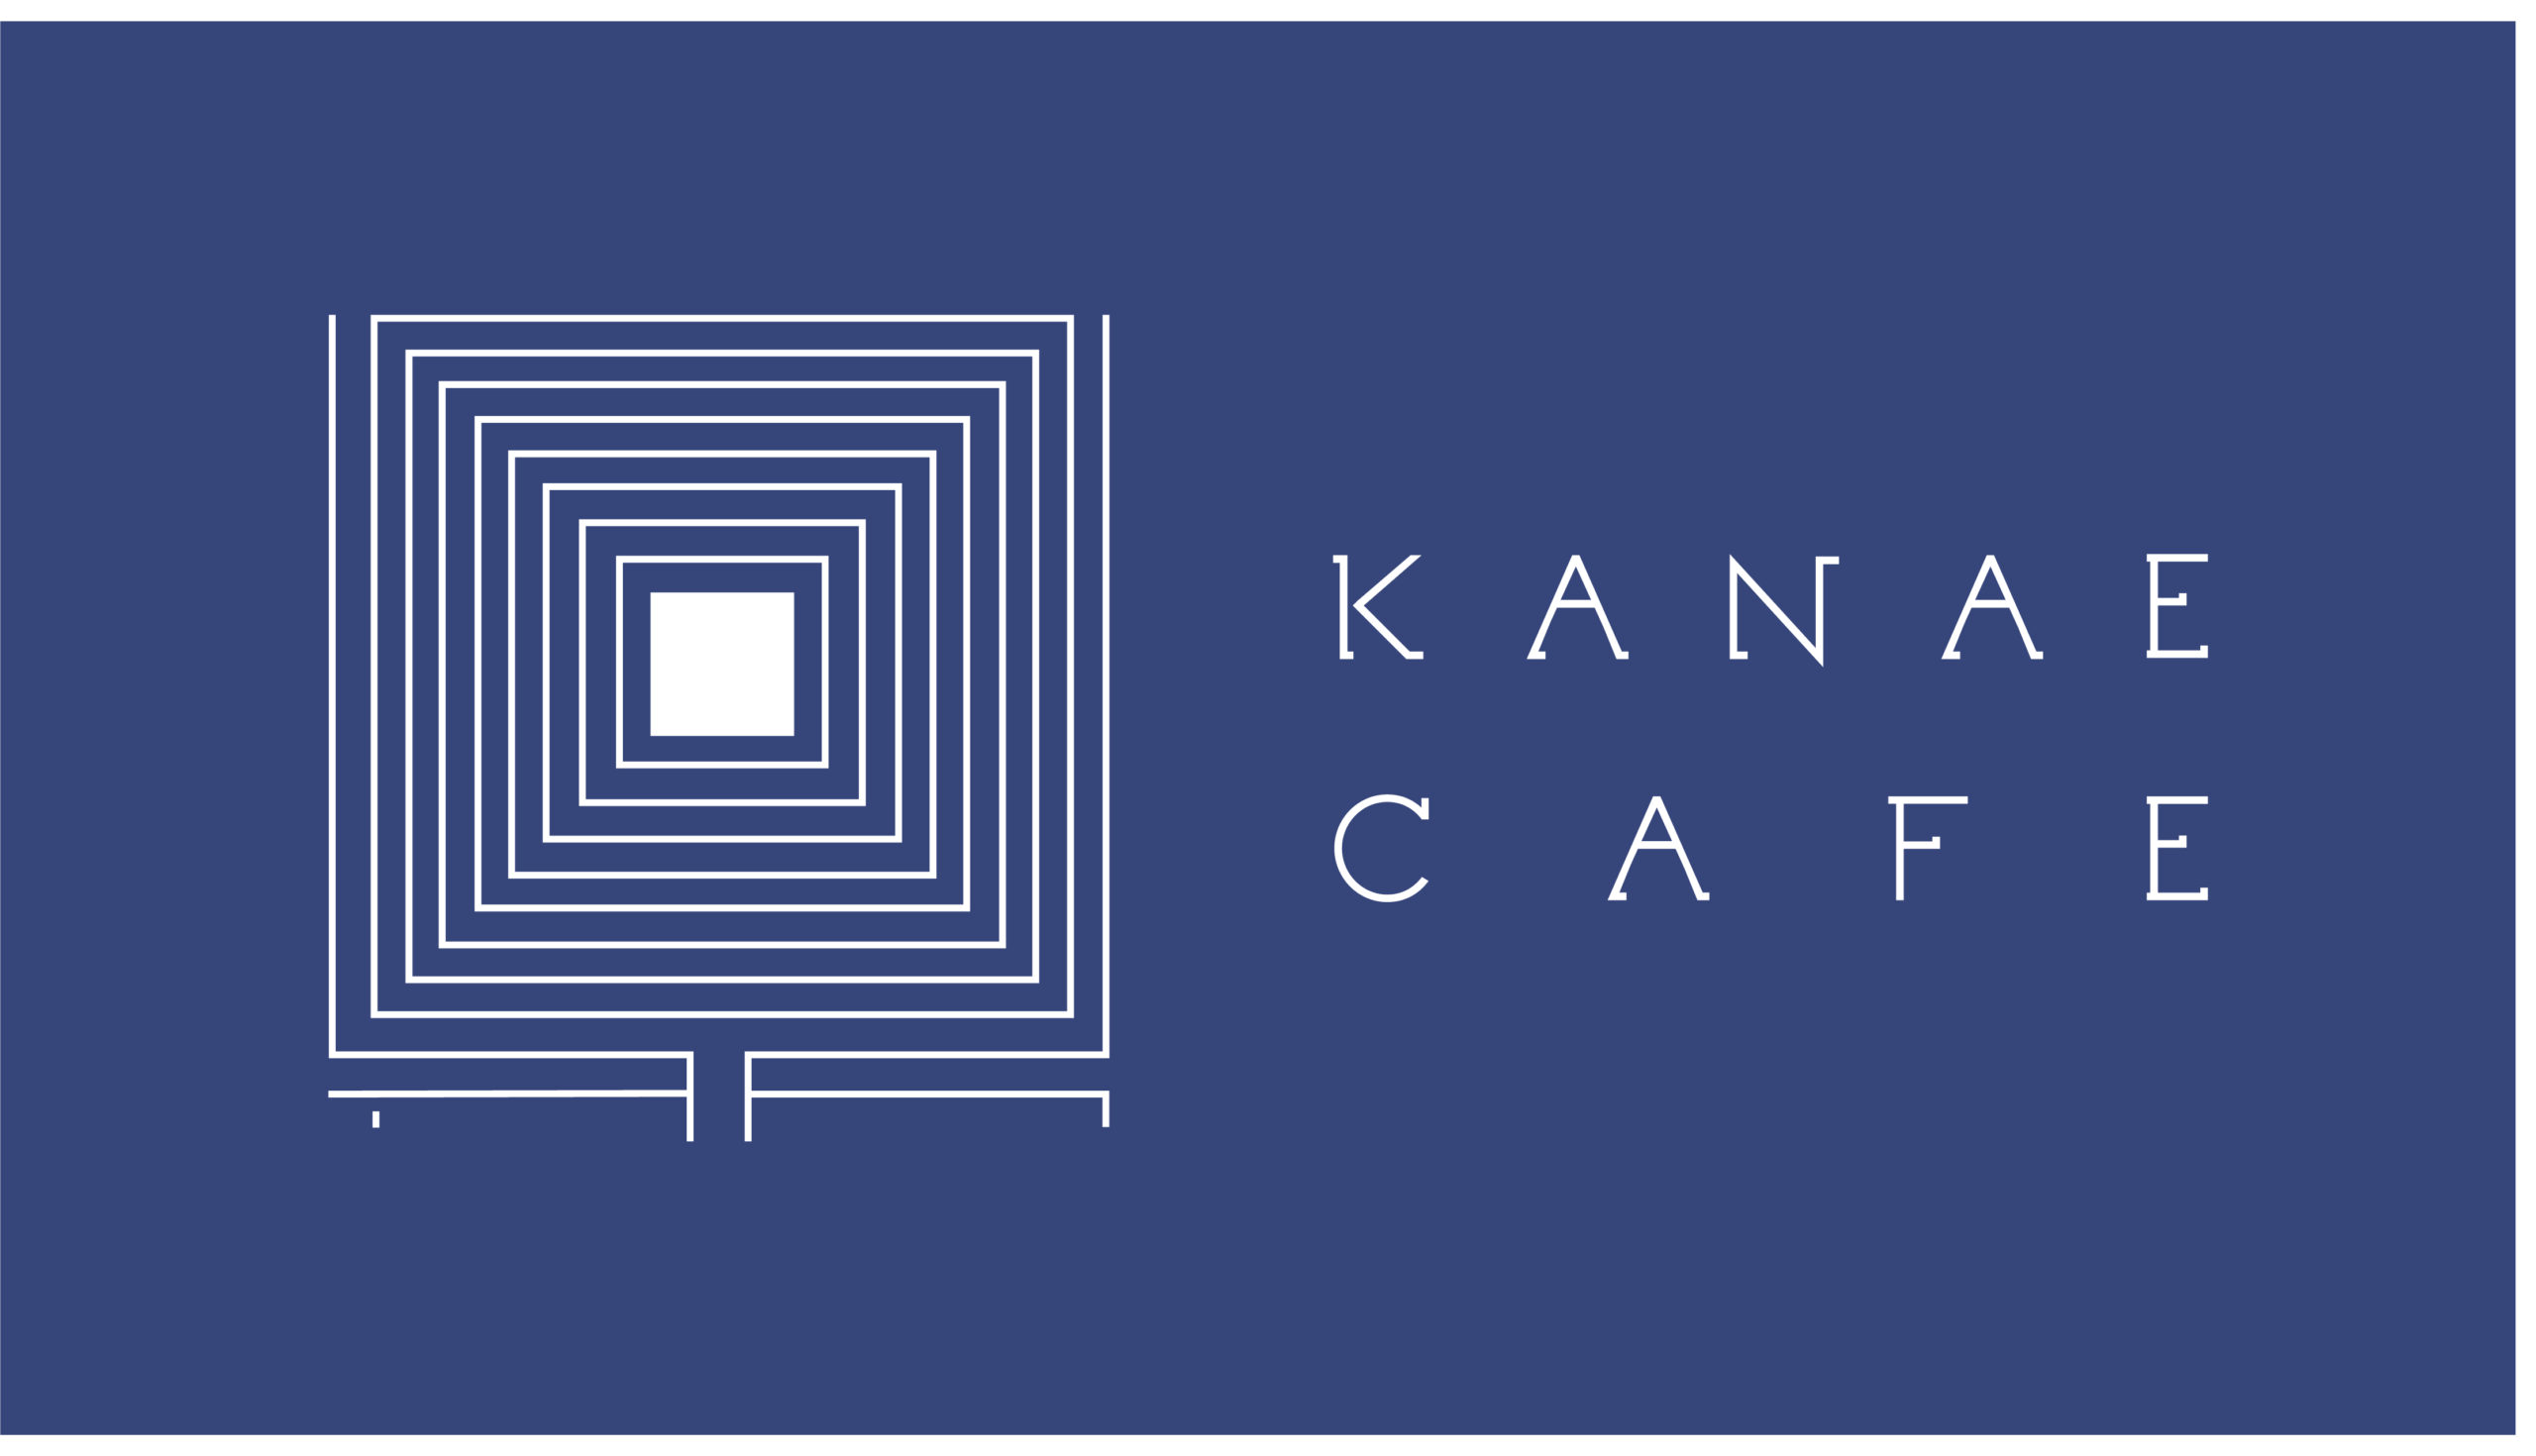 KANAE CAFE